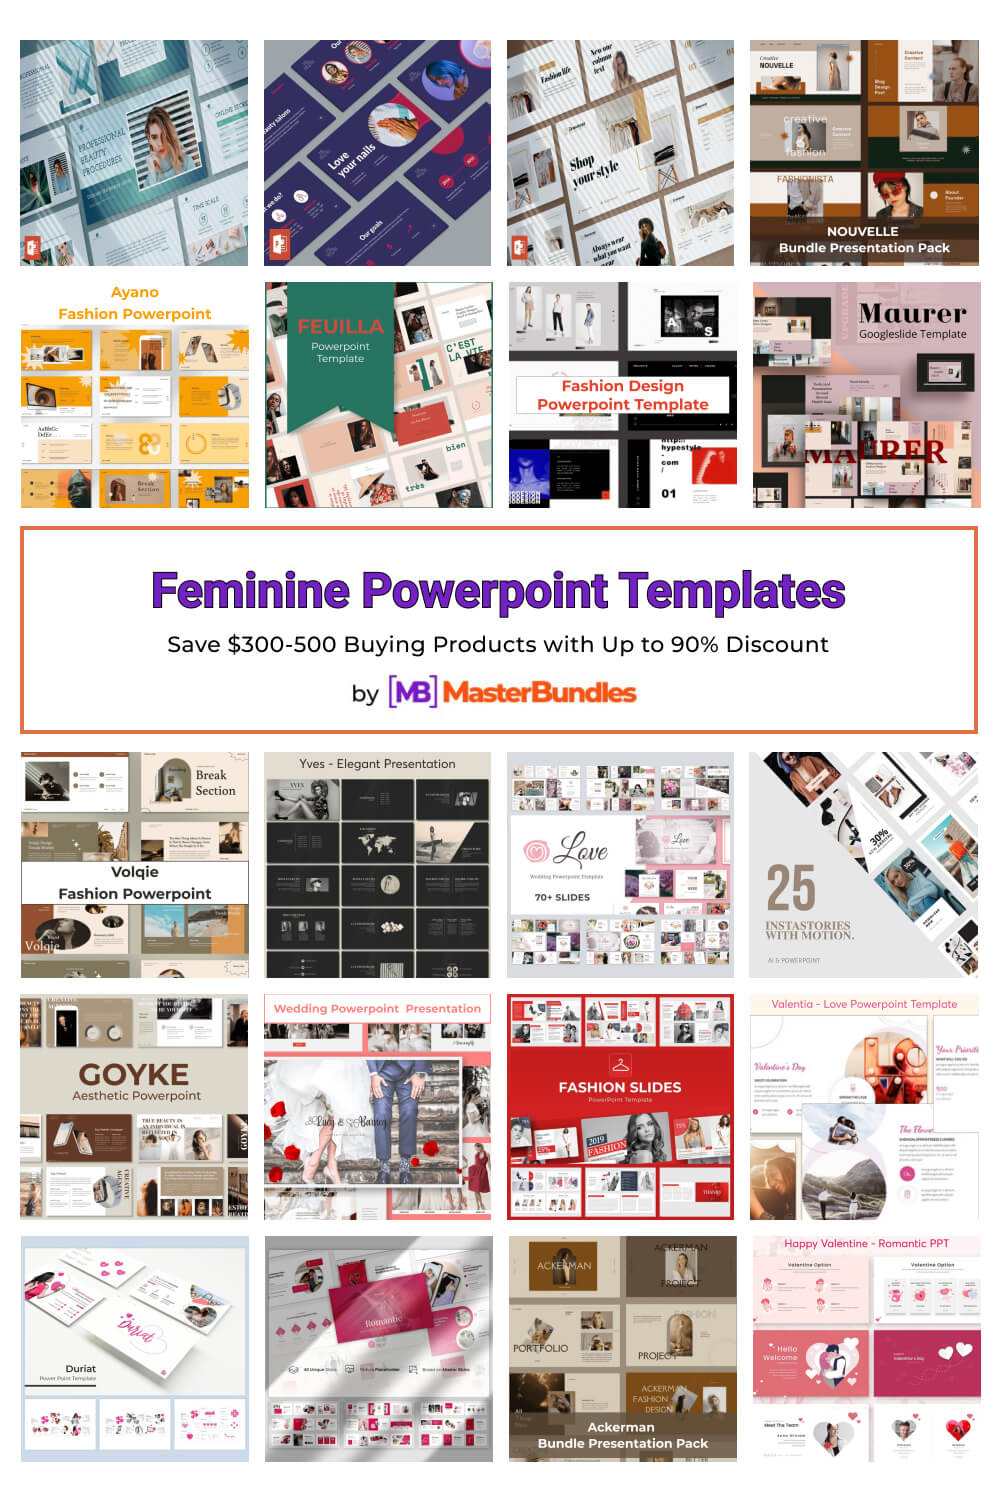 feminine powerpoint templates pinterest image.